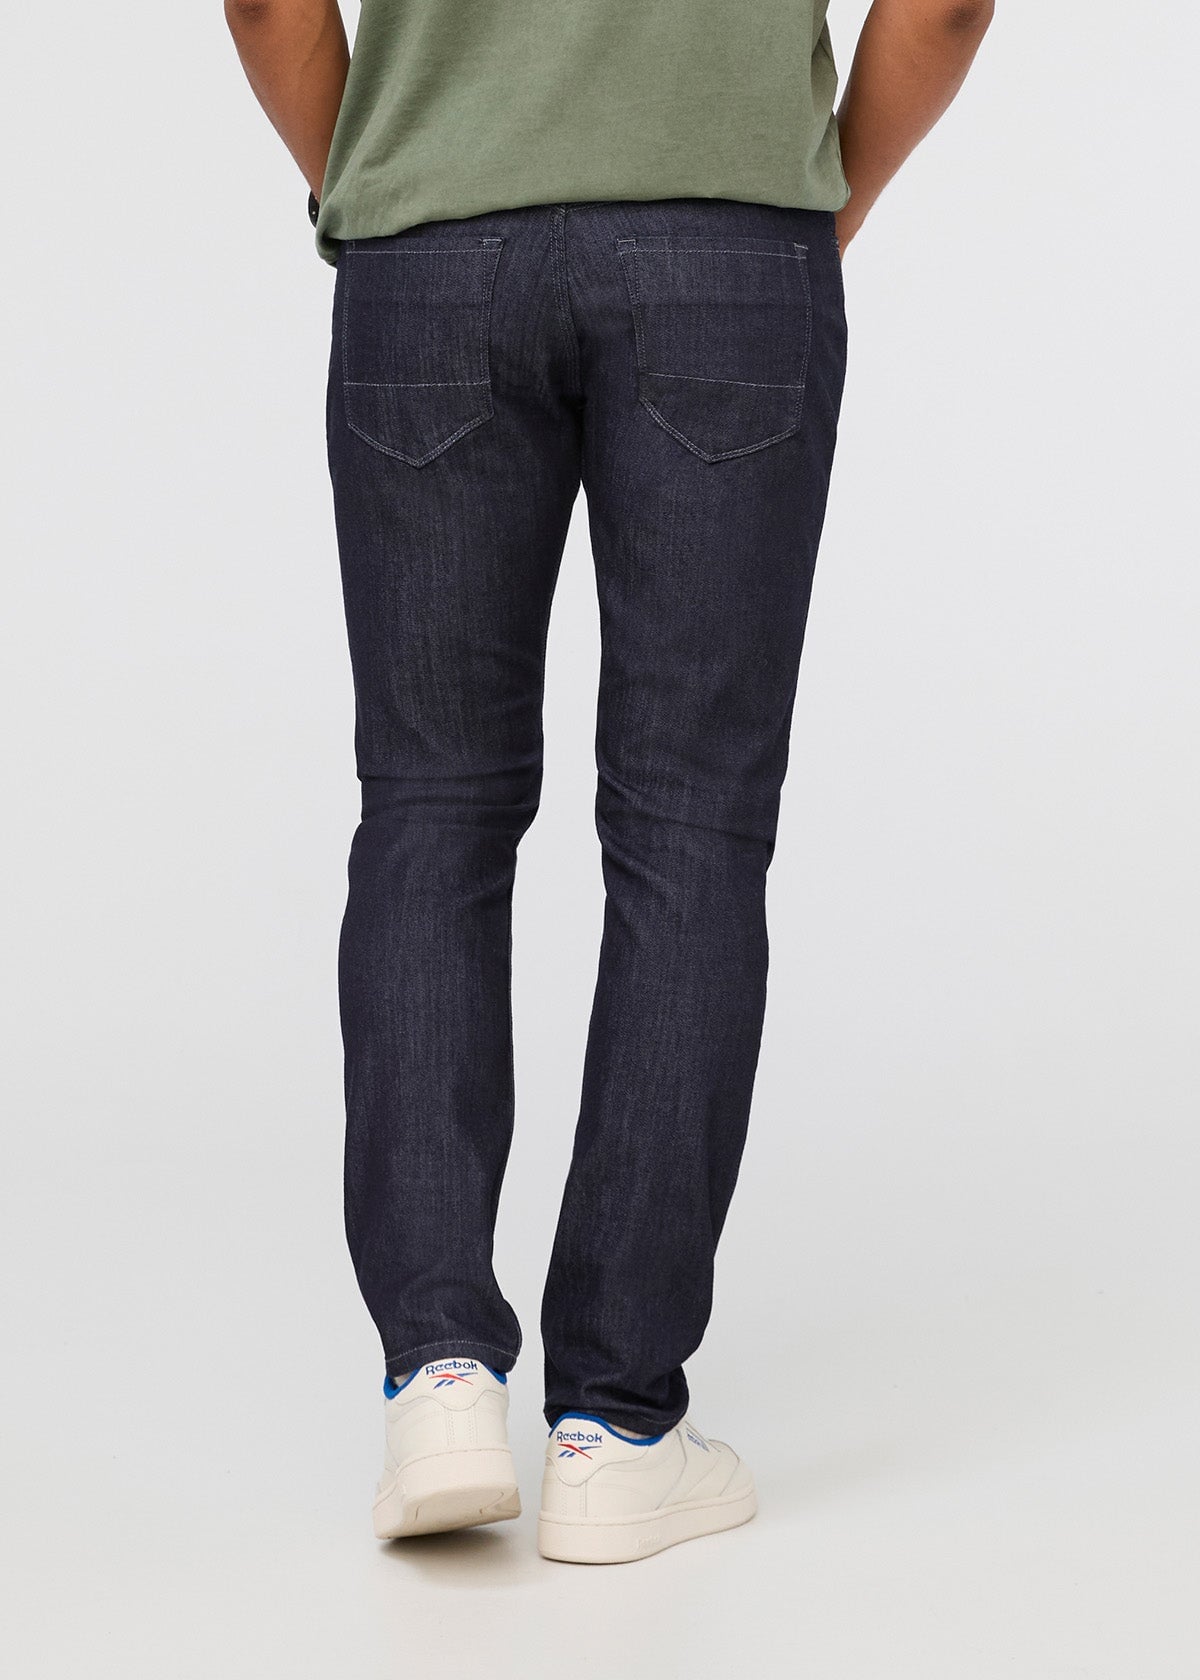 BOSS Slim-Fit Performance-Stretch Cotton Jeans, Jeans